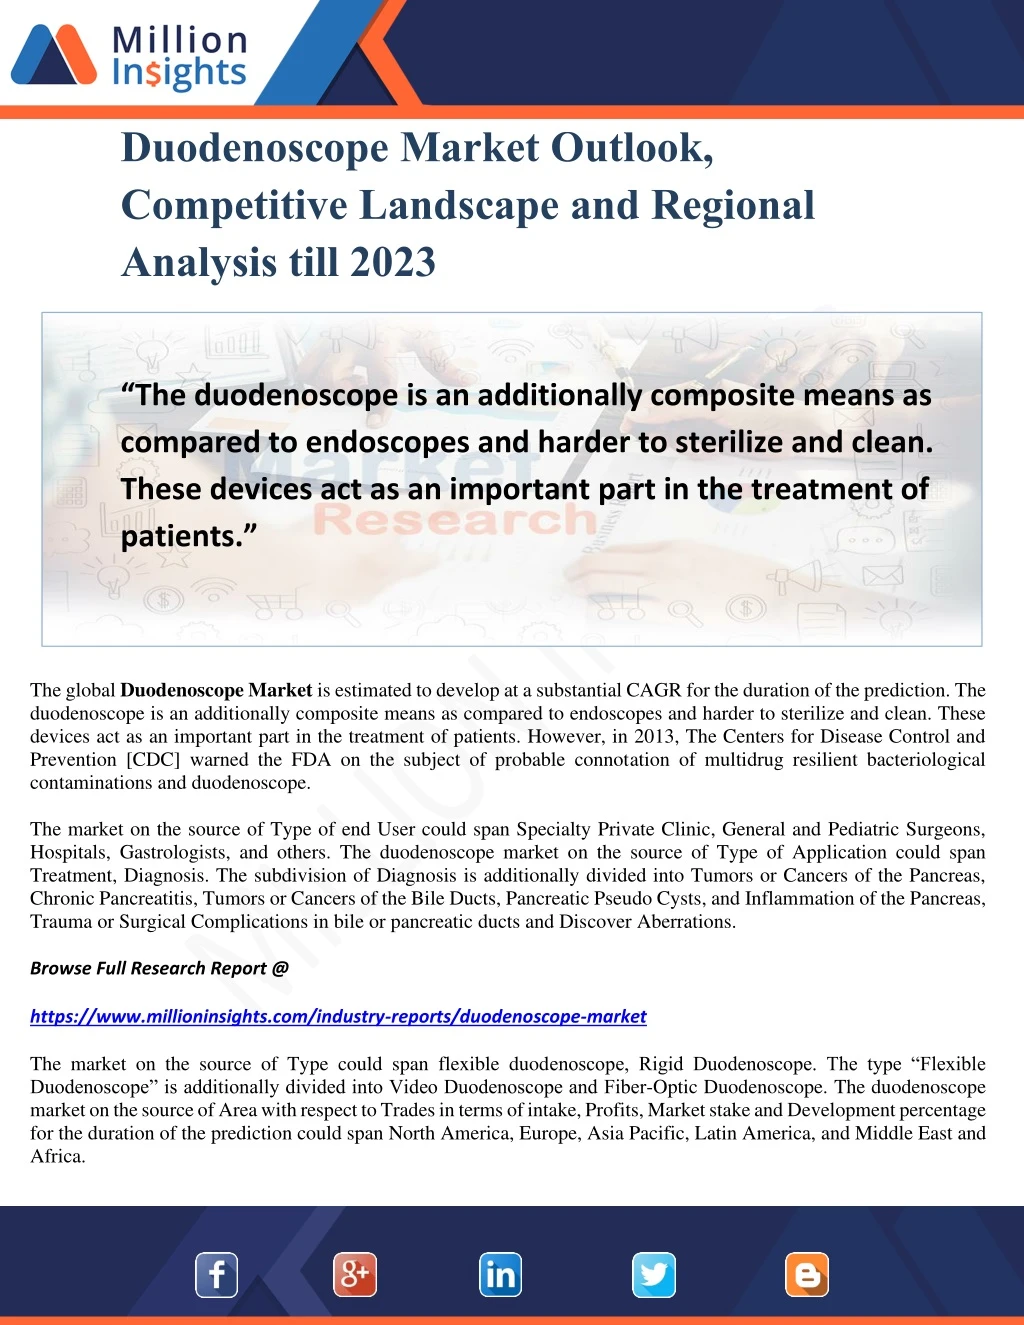 duodenoscope market outlook competitive landscape